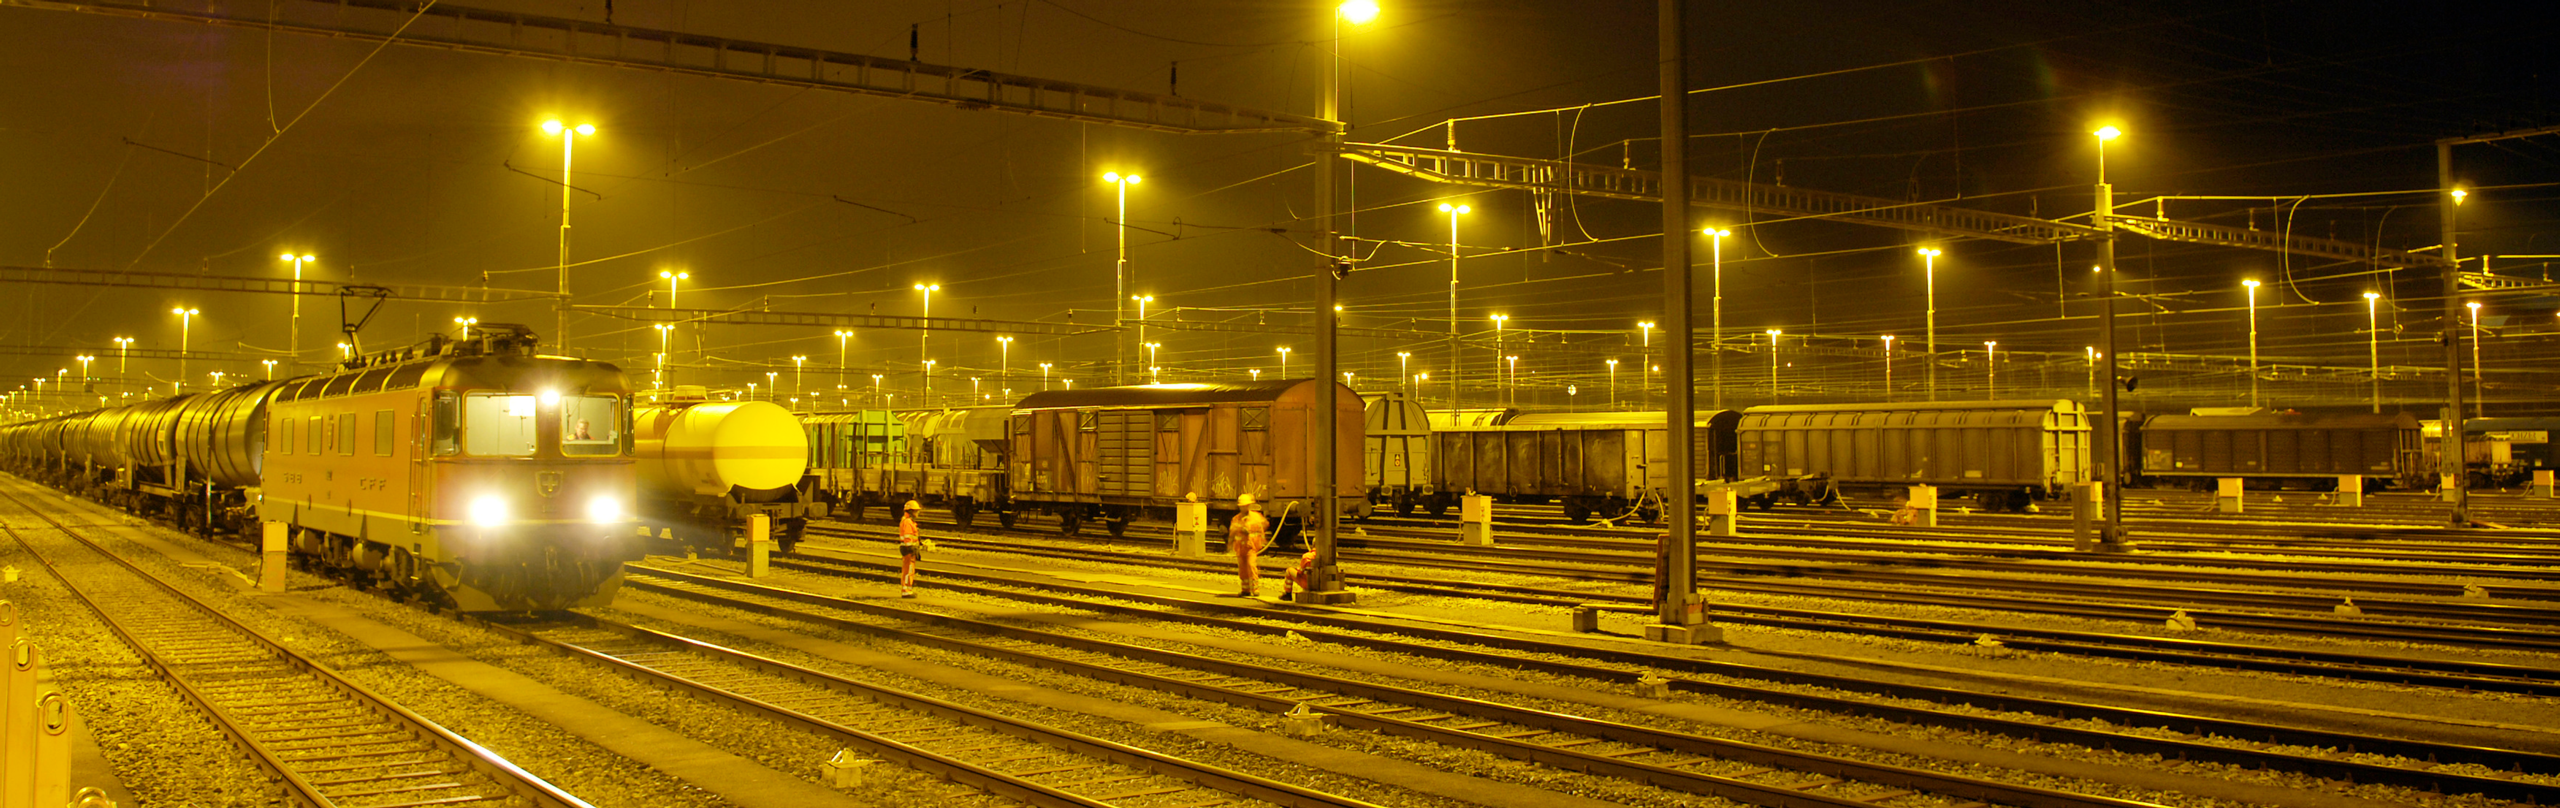 binari ferroviari di notte